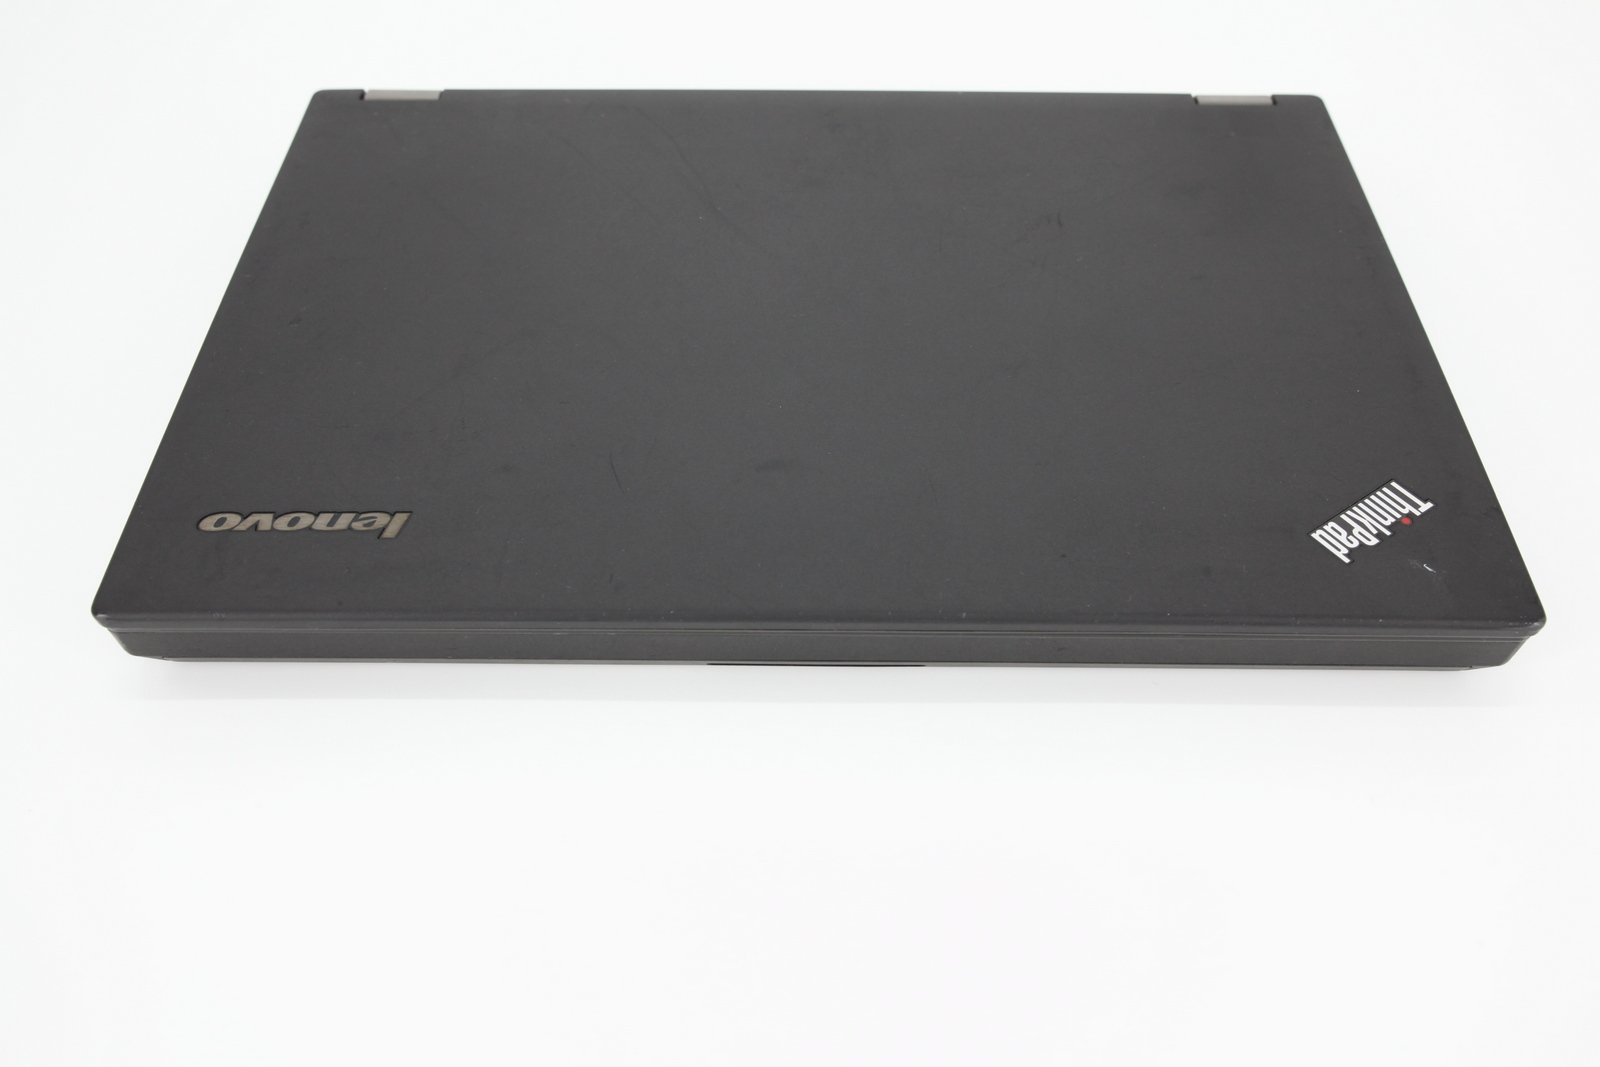 Lenovo T440P Laptop: Core i7-4600M, 8GB, 240GB SSD, 730M, 14" Screen, VAT - CruiseTech